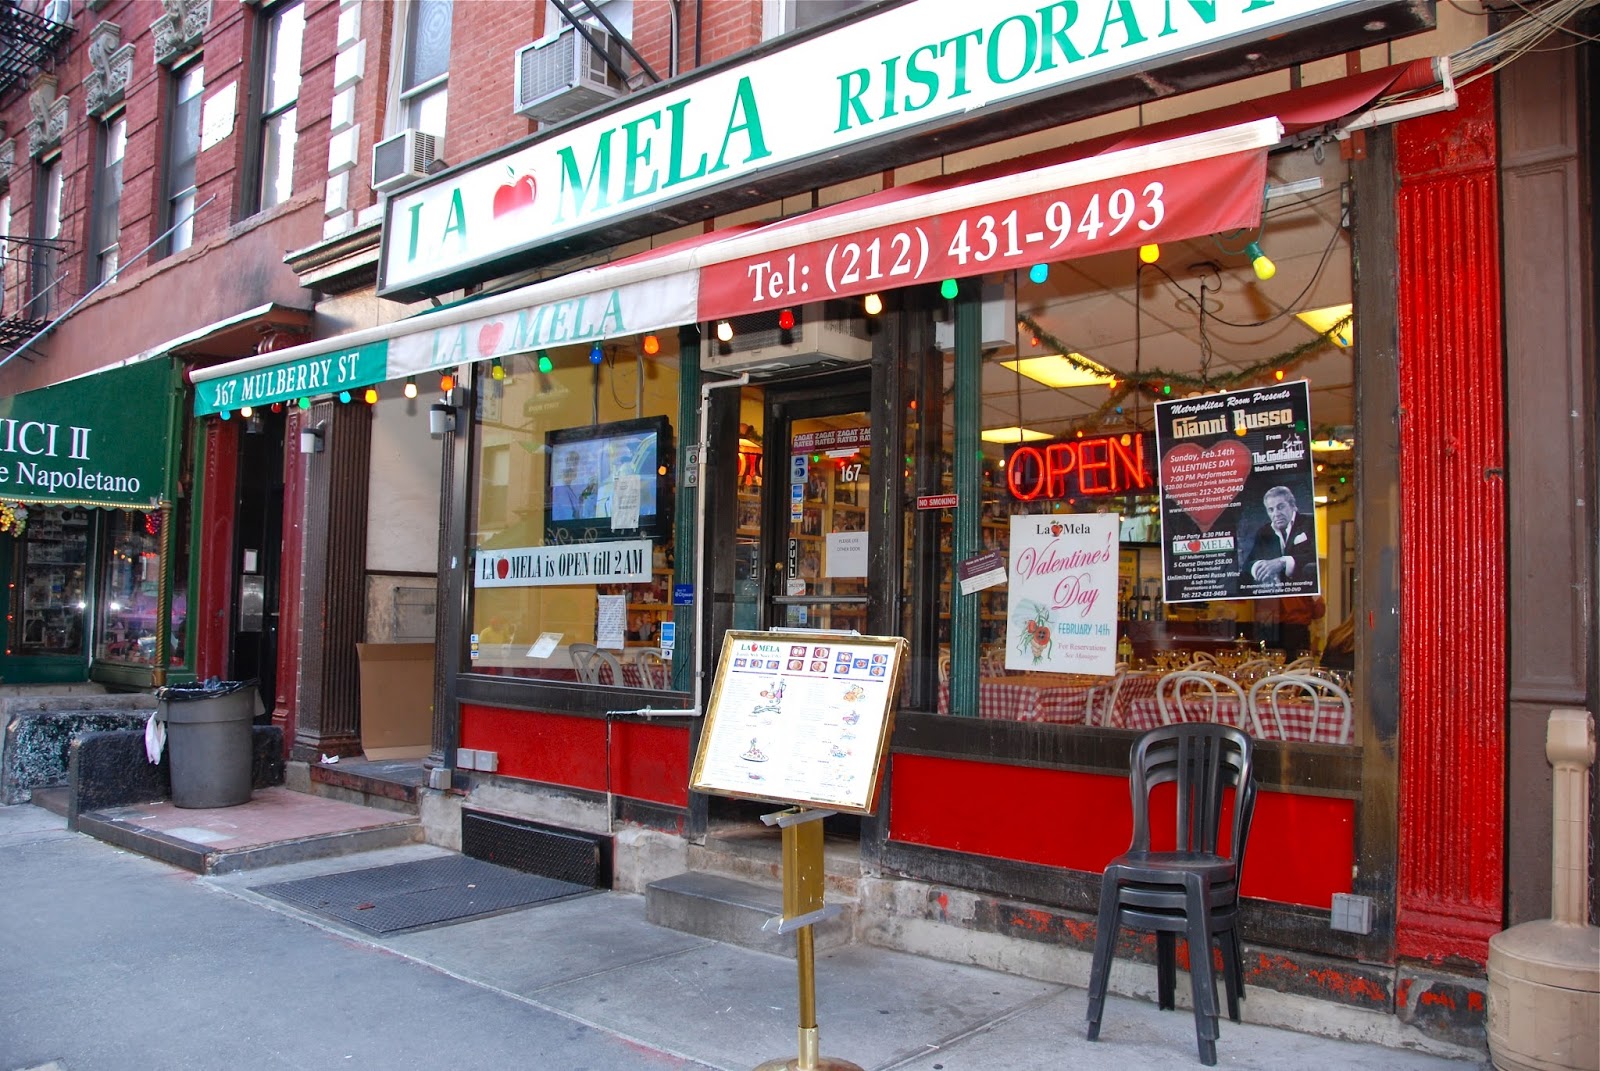 Photo of La Mela in New York City, New York, United States - 2 Picture of Restaurant, Food, Point of interest, Establishment, Bar